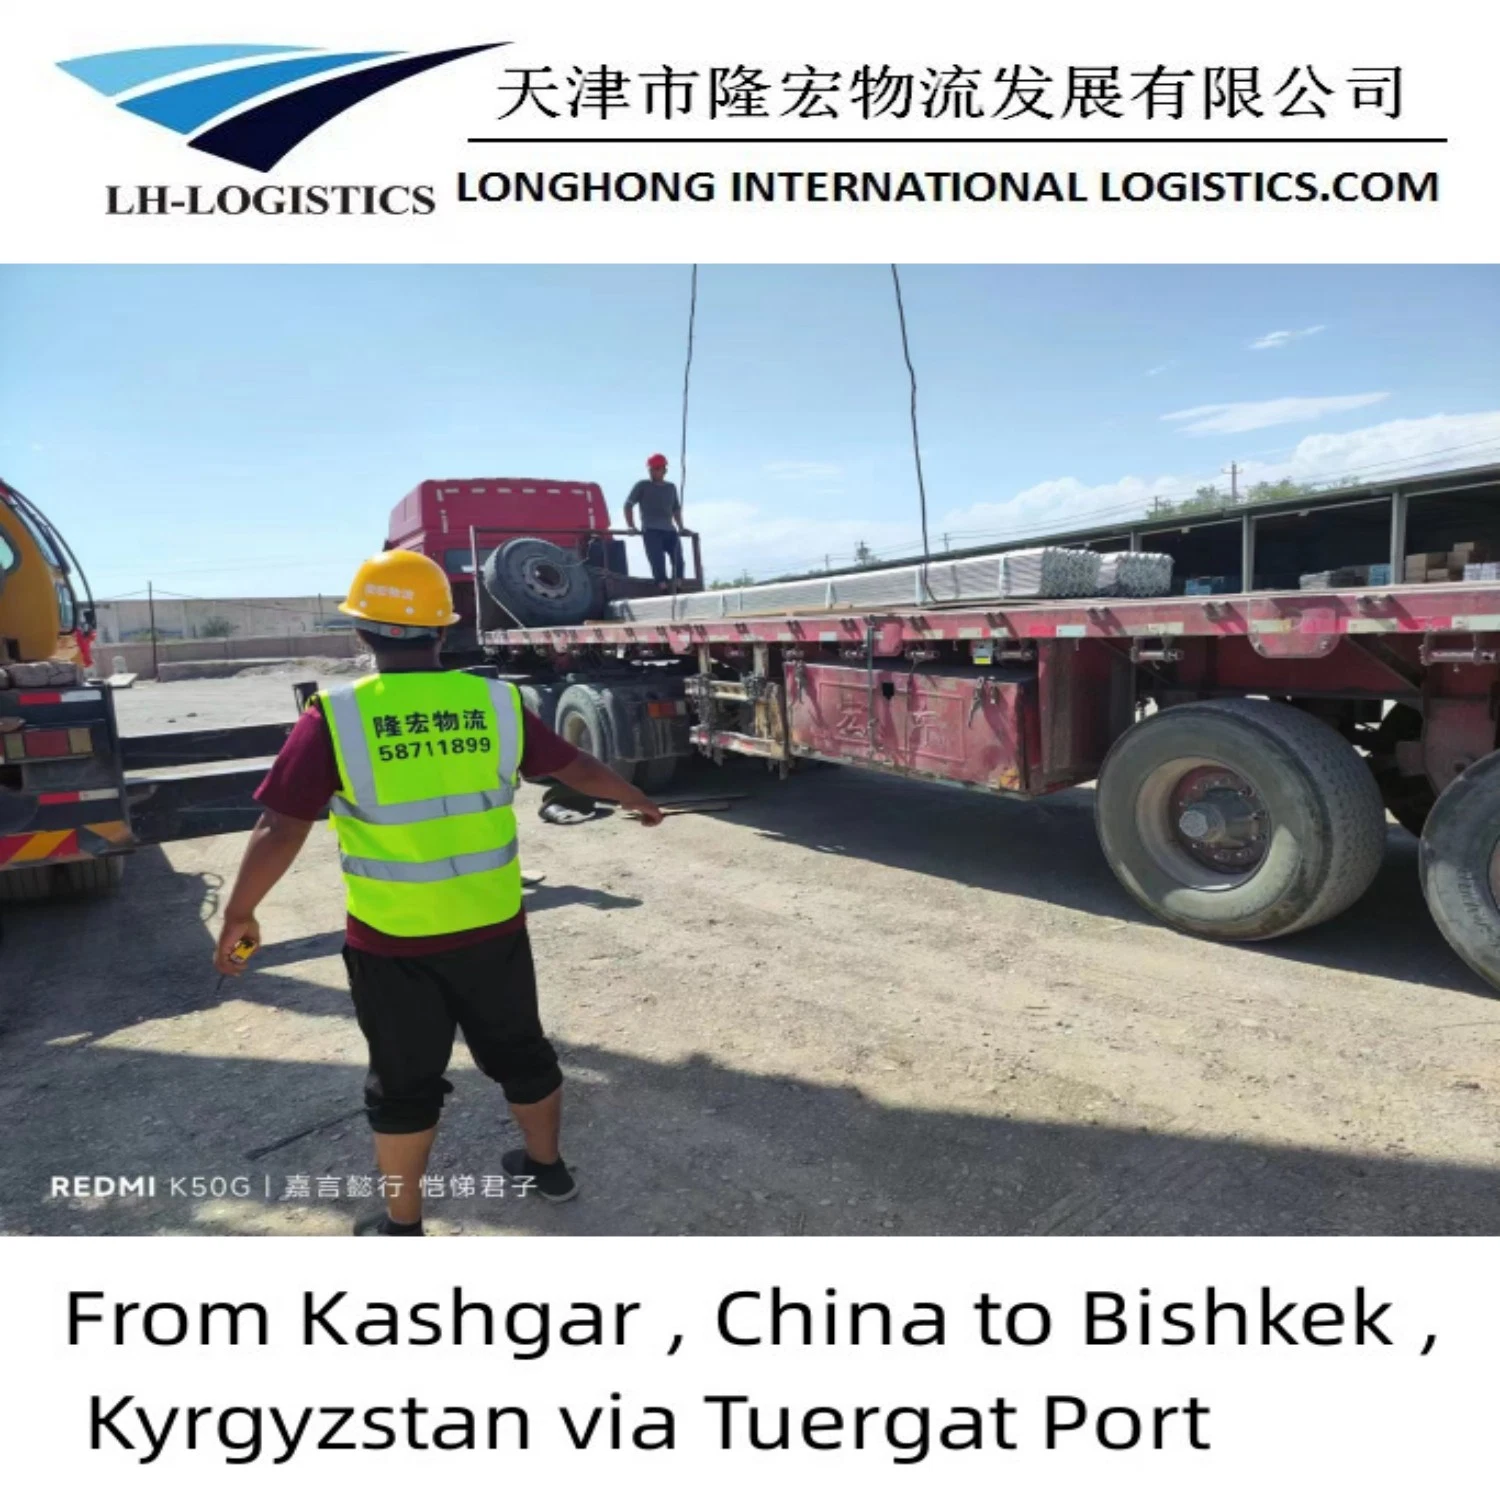 Reliable Specialized Logistics Service for Truck Transportation Service Shipping From China to Tajikistan, Uzbekistan, Kazakhstan